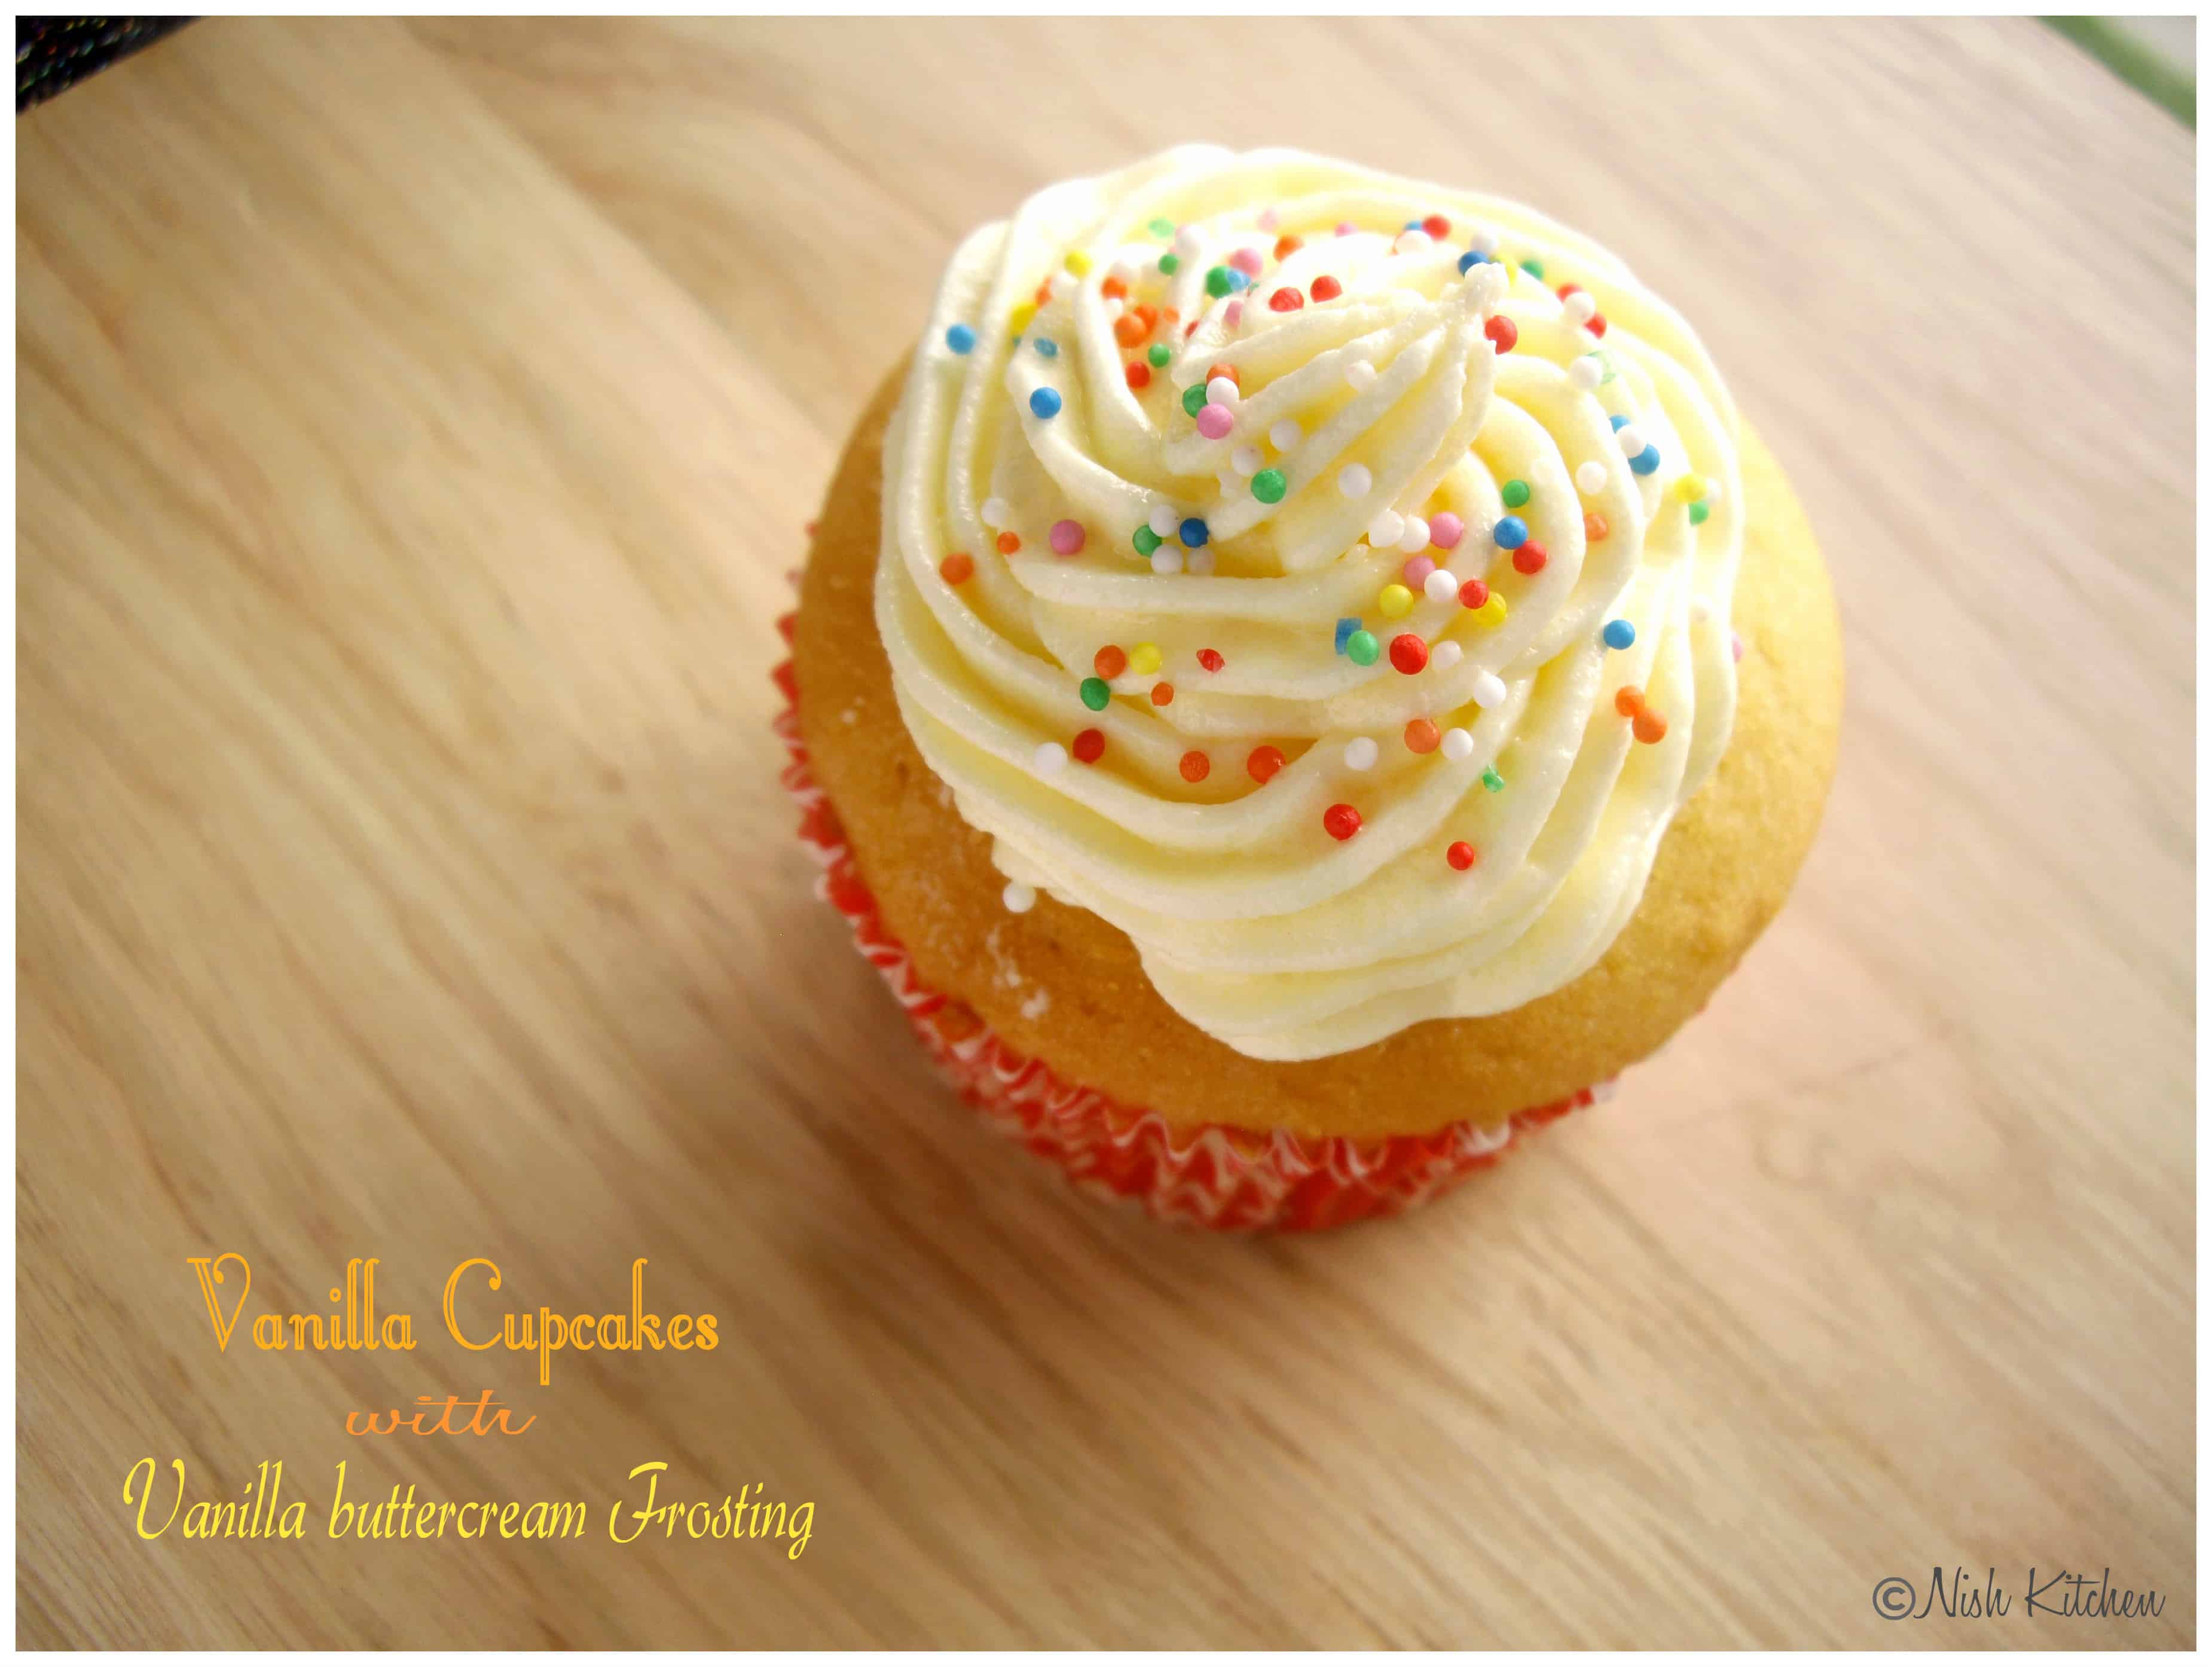 Vanilla Cupcakes with Vanilla Buttercream Frosting - NISH KITCHEN